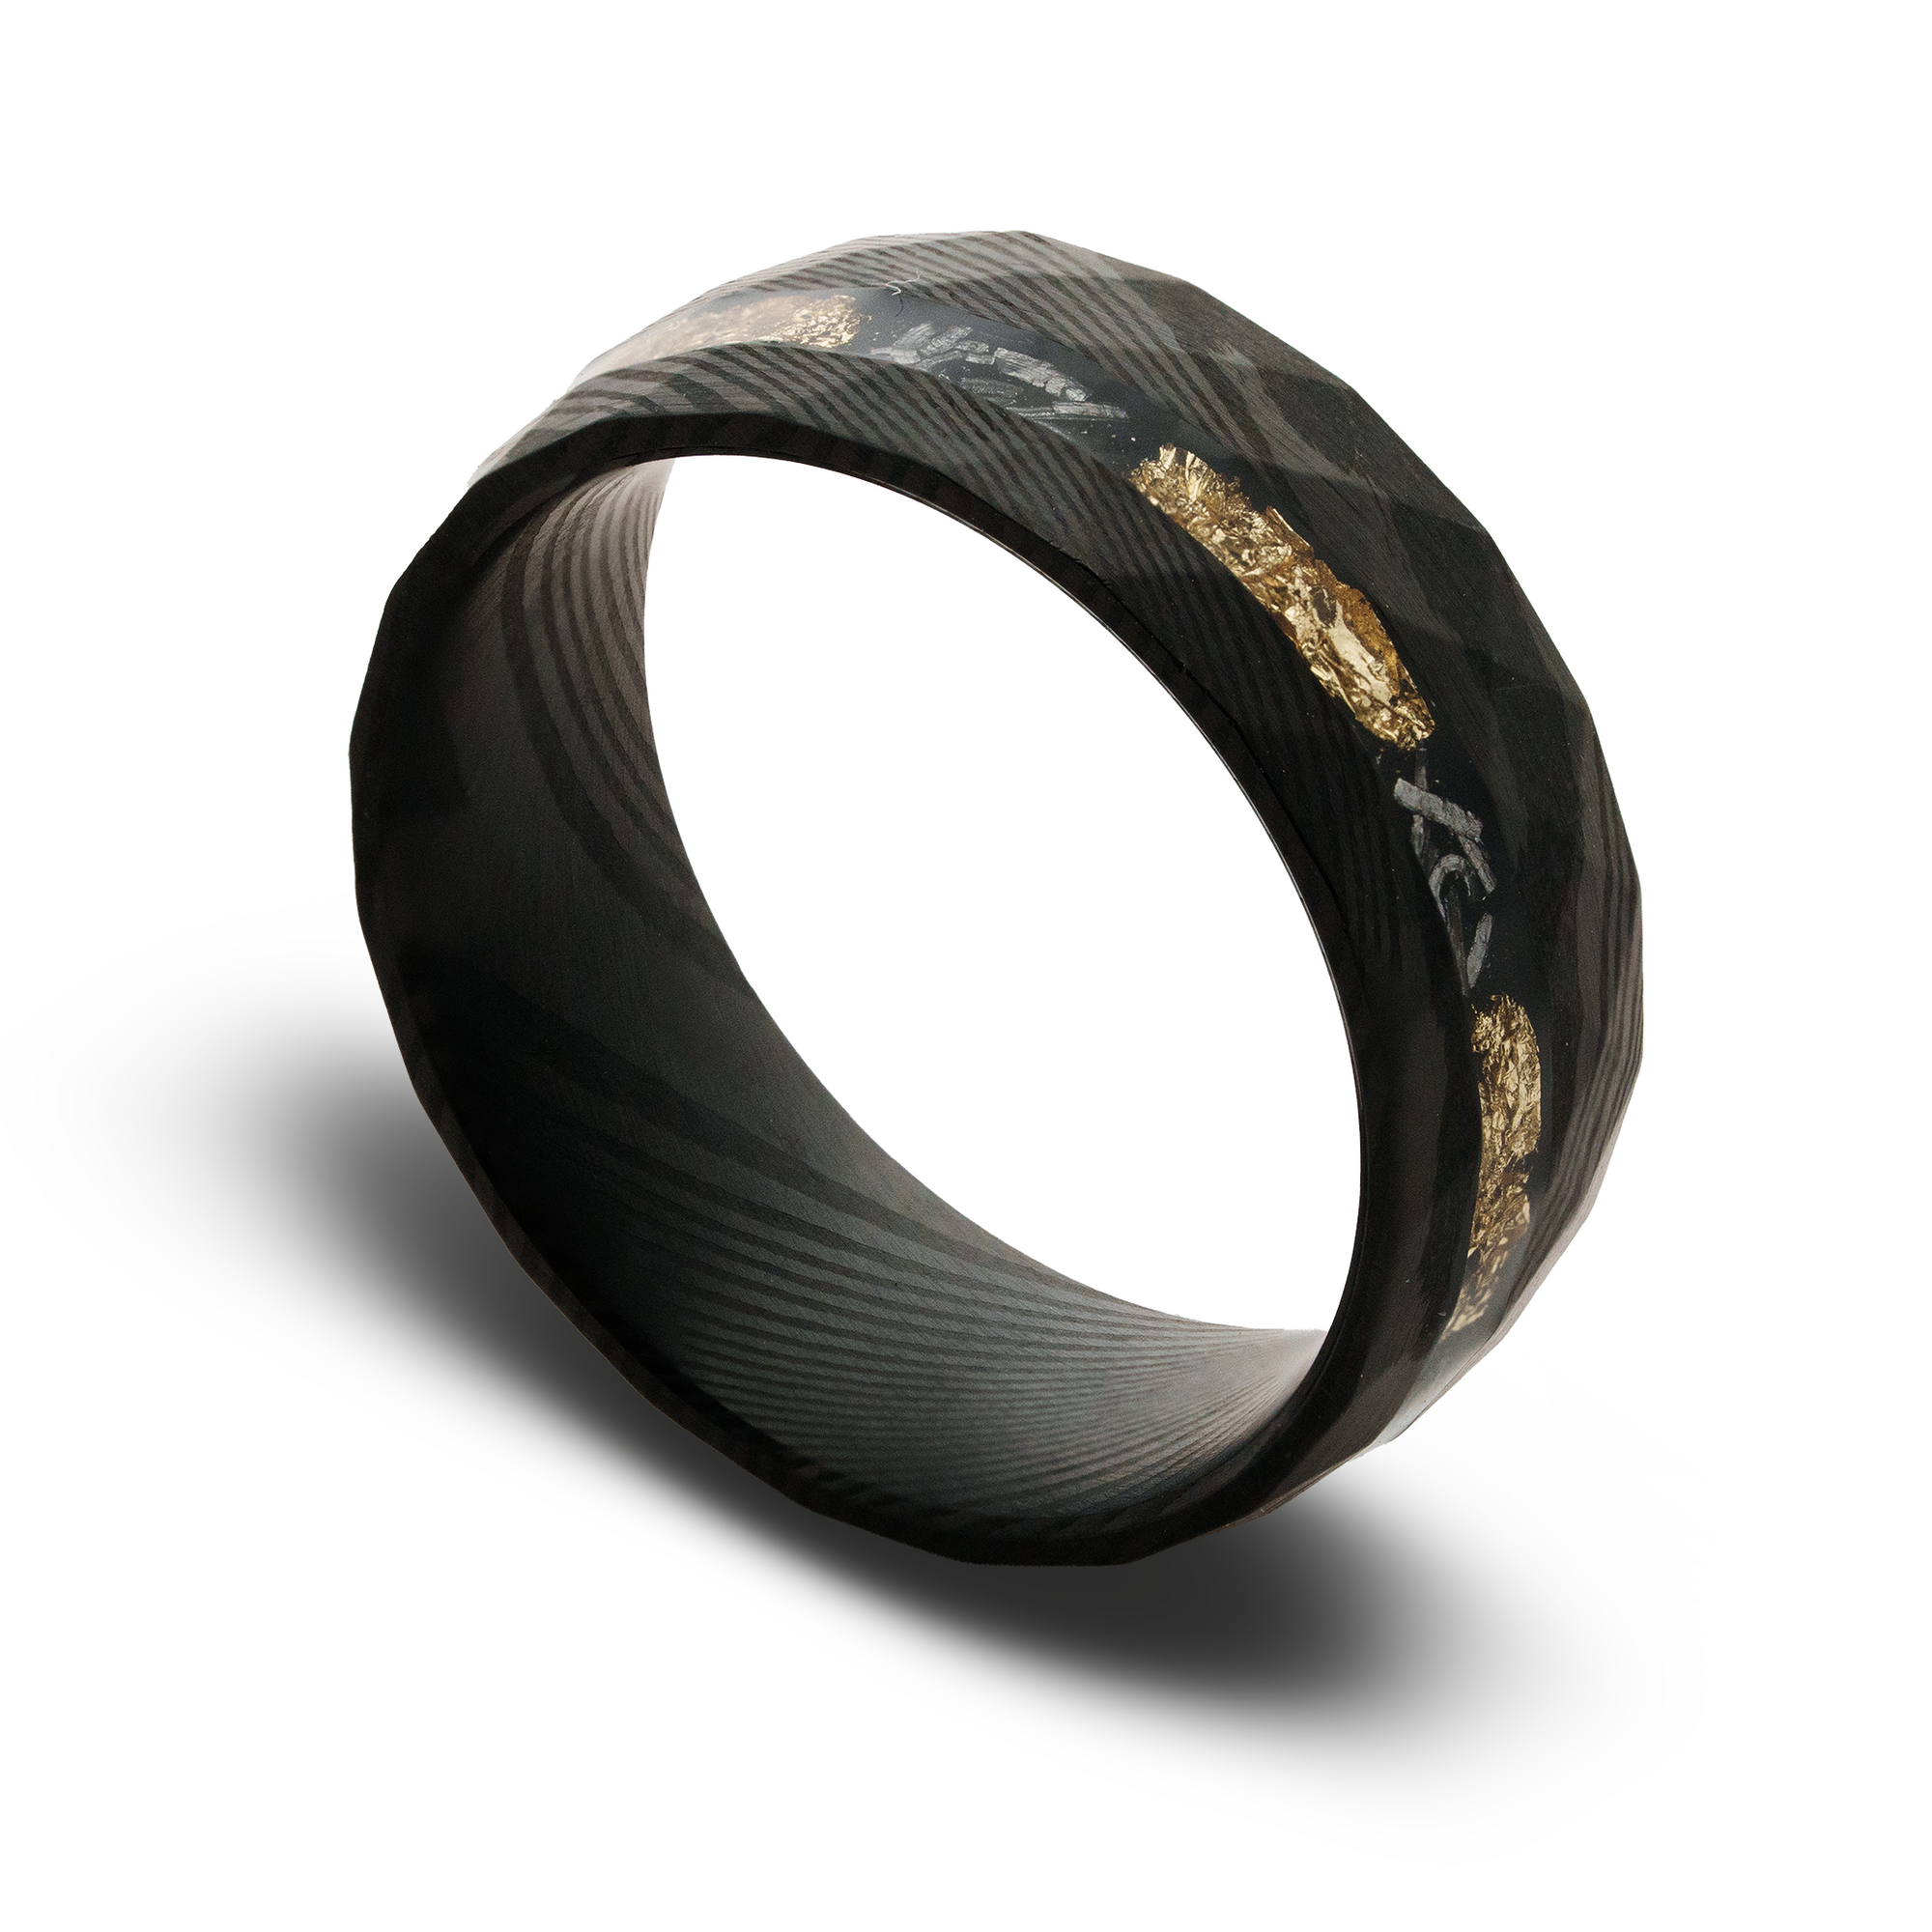 The “Empyrean” Ring